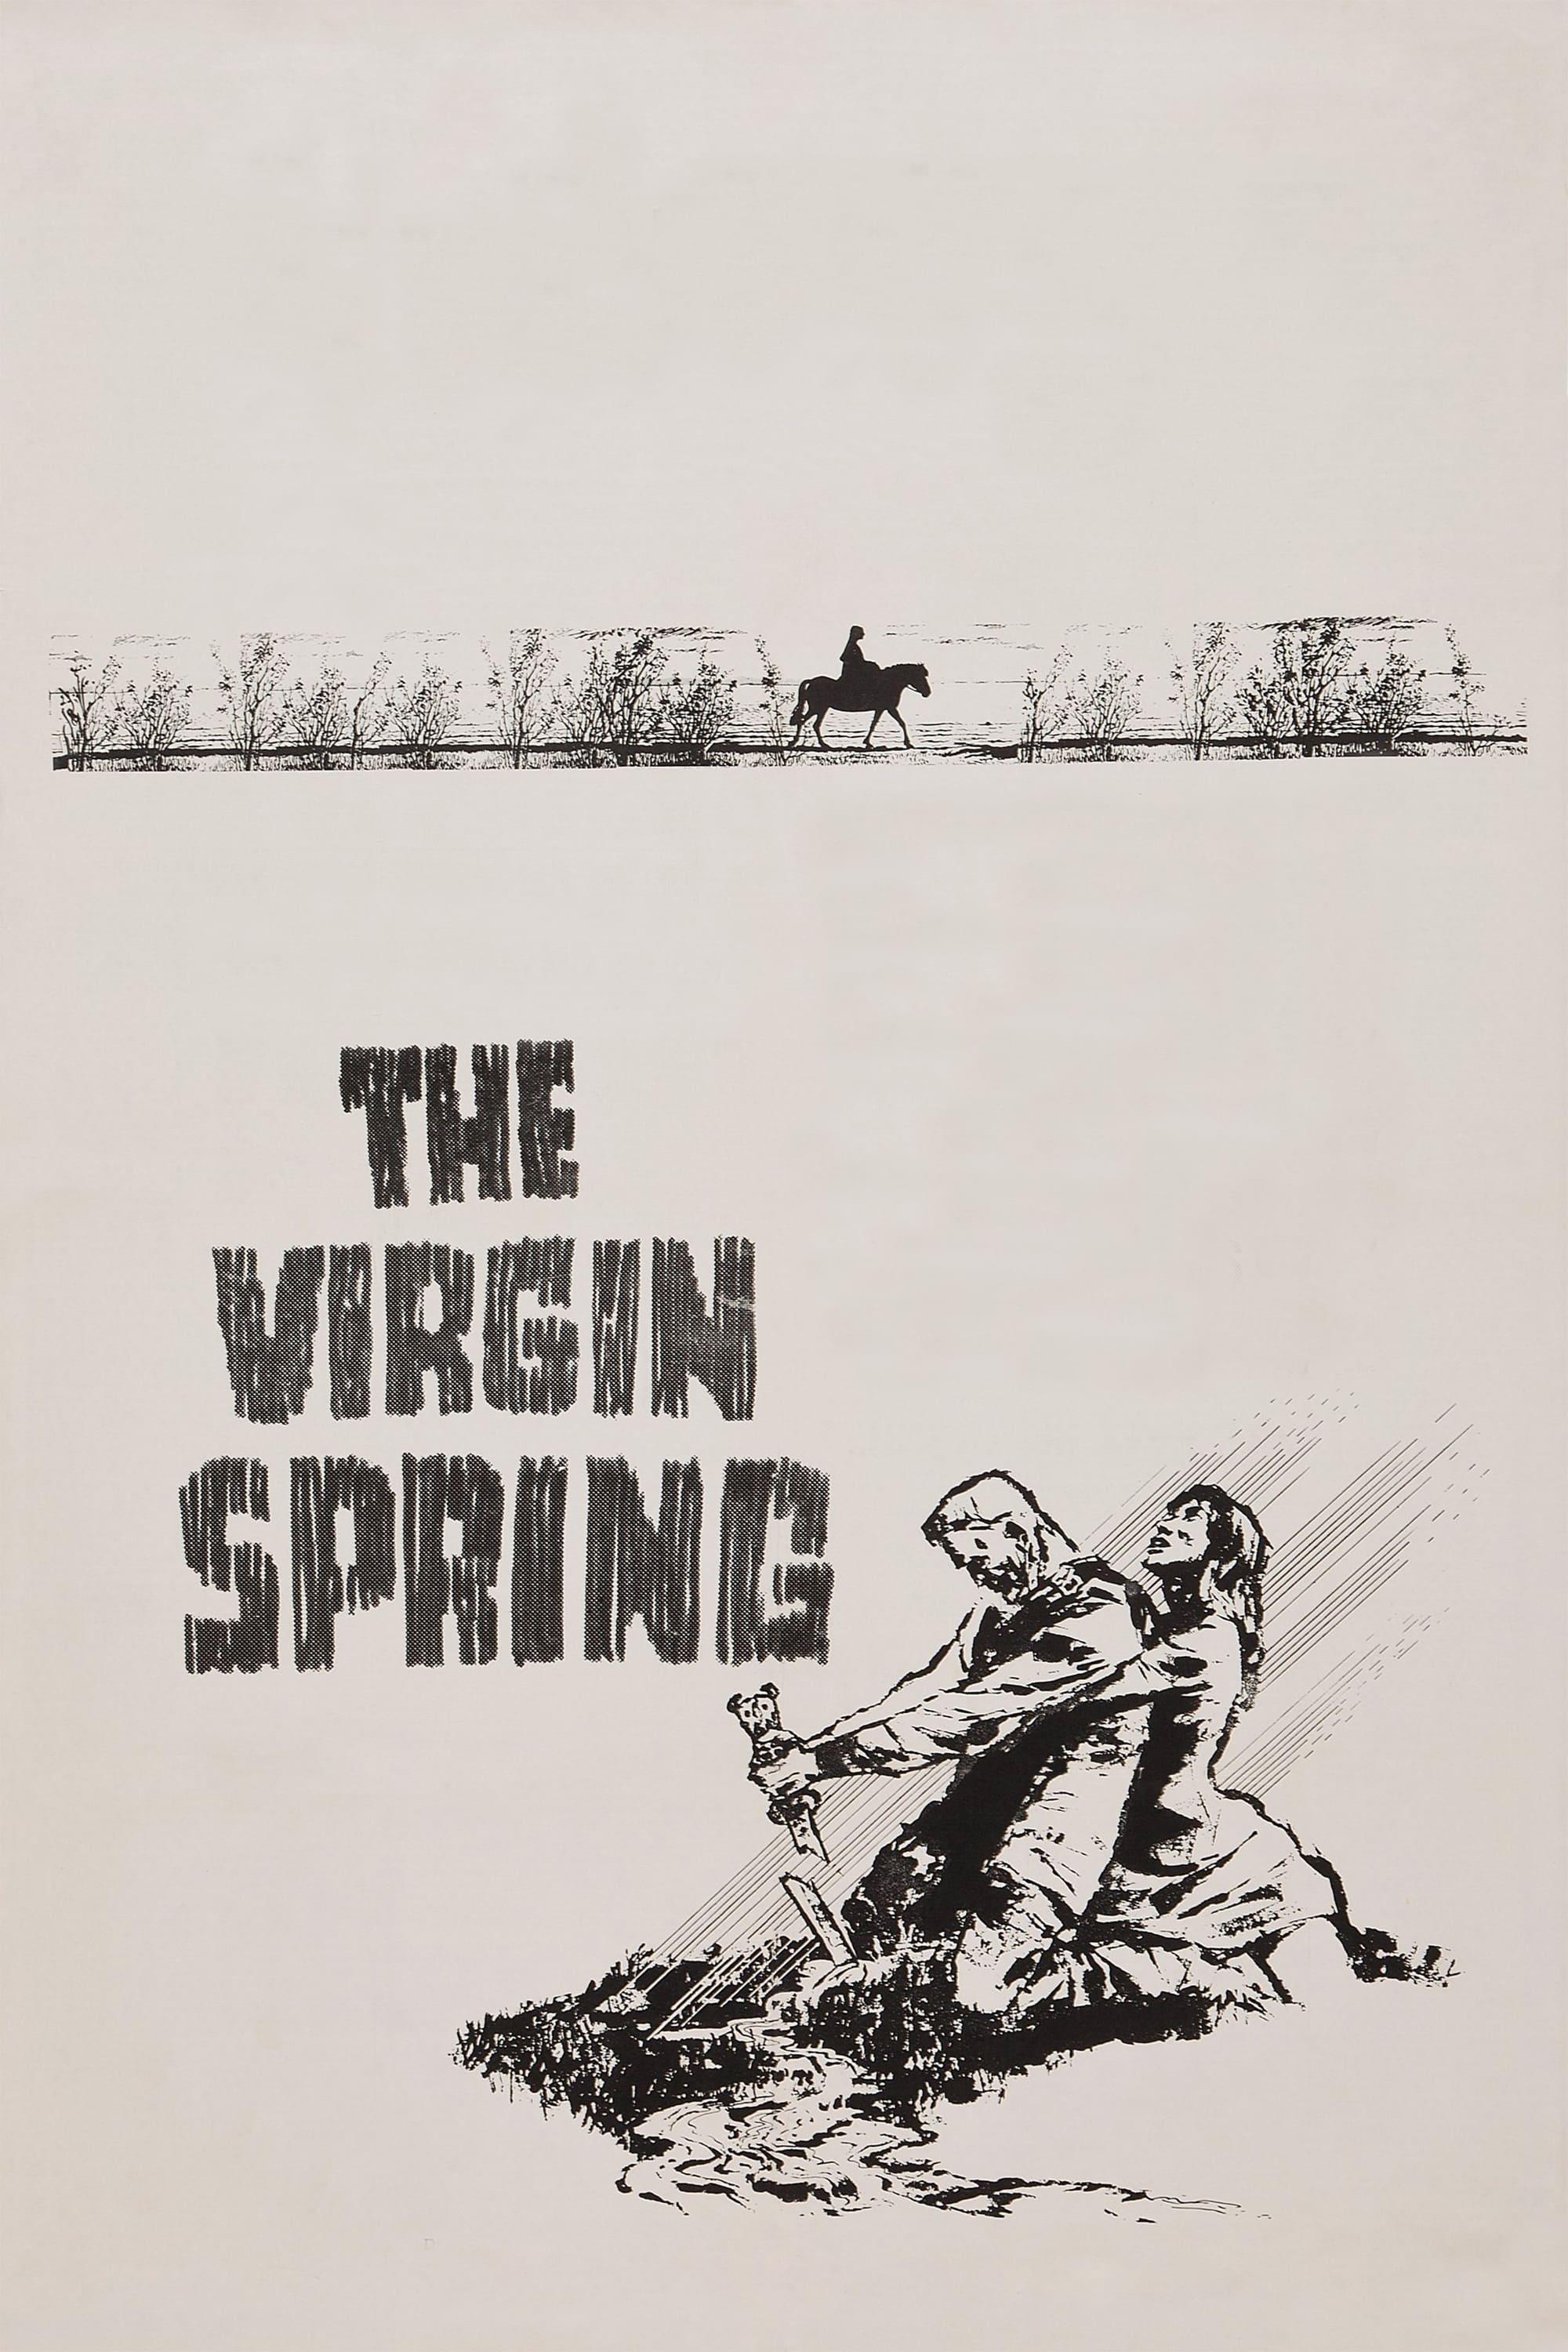 The Virgin Spring poster